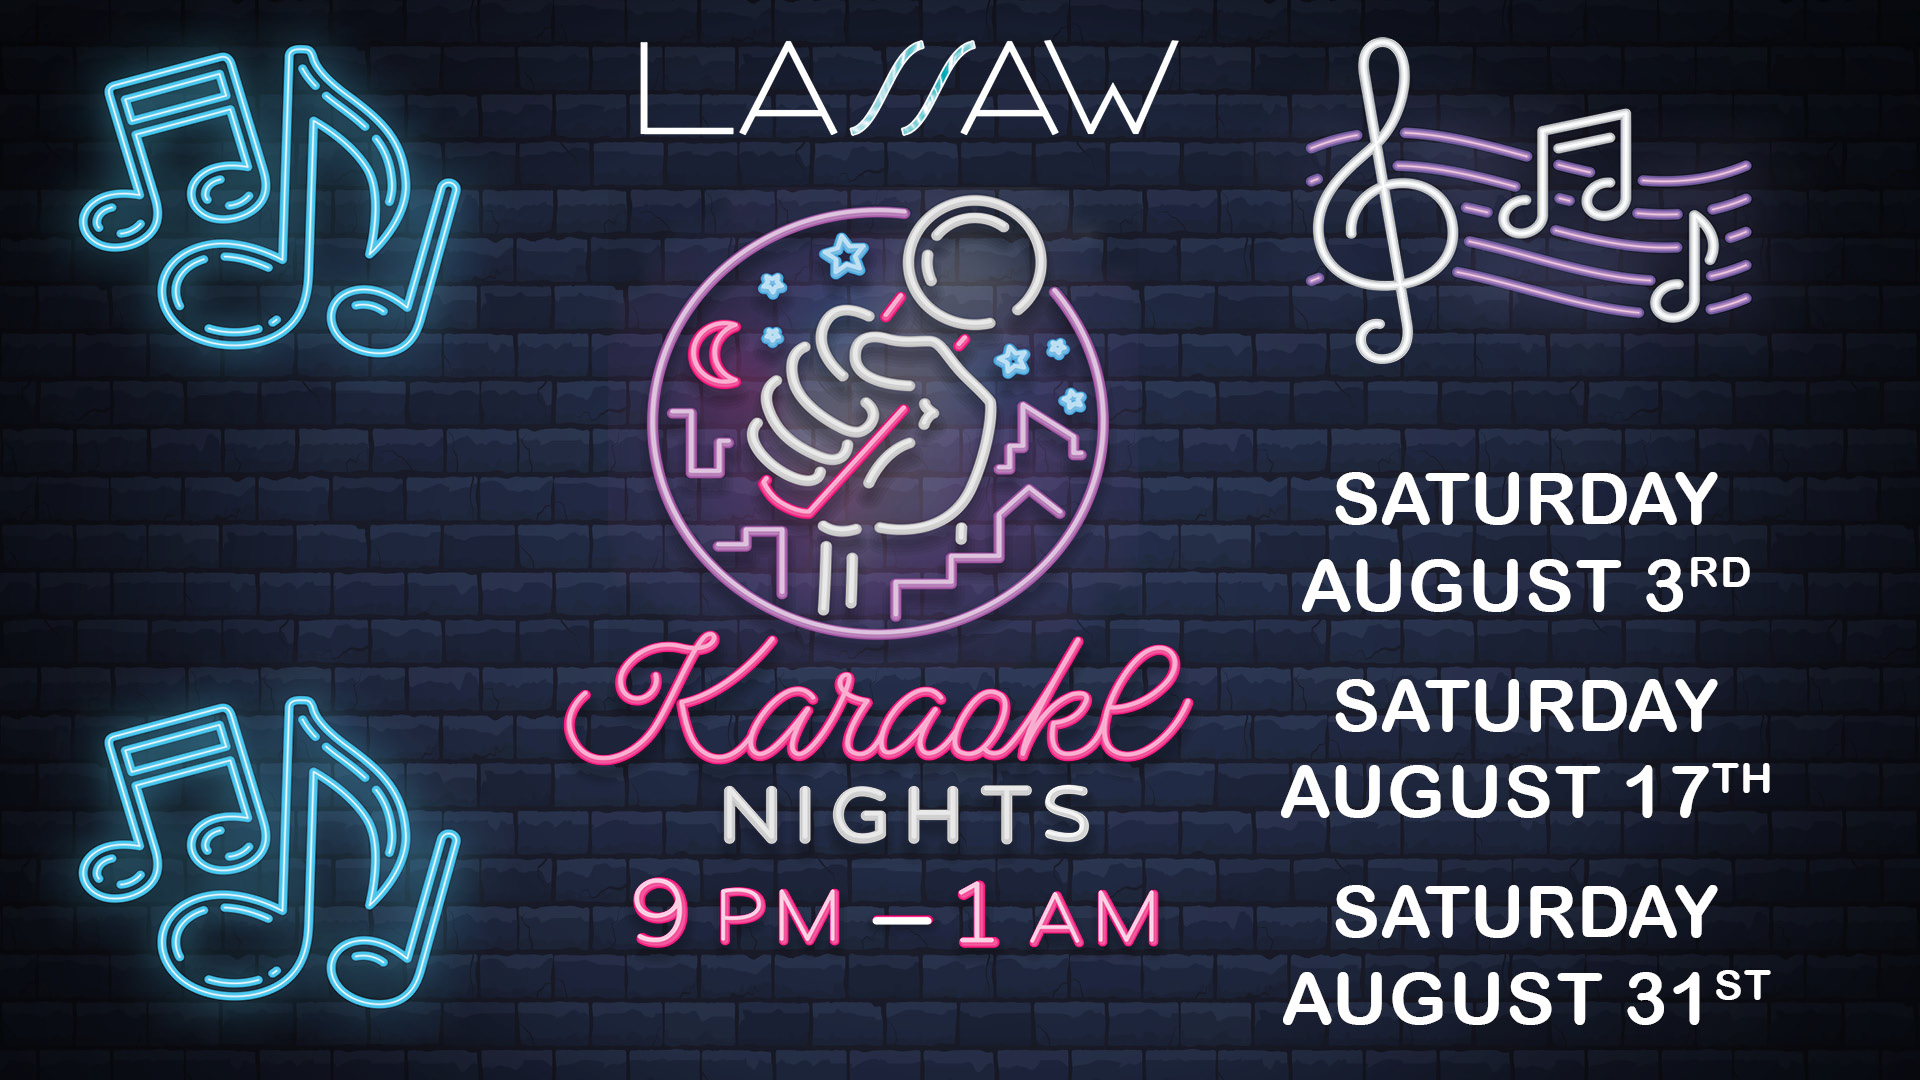 Karaoke Night, Karaoke, local events, evaro, missoula, missoula events, Lassaw, gray wolf, gray wolf peak, gray wolf peak casino